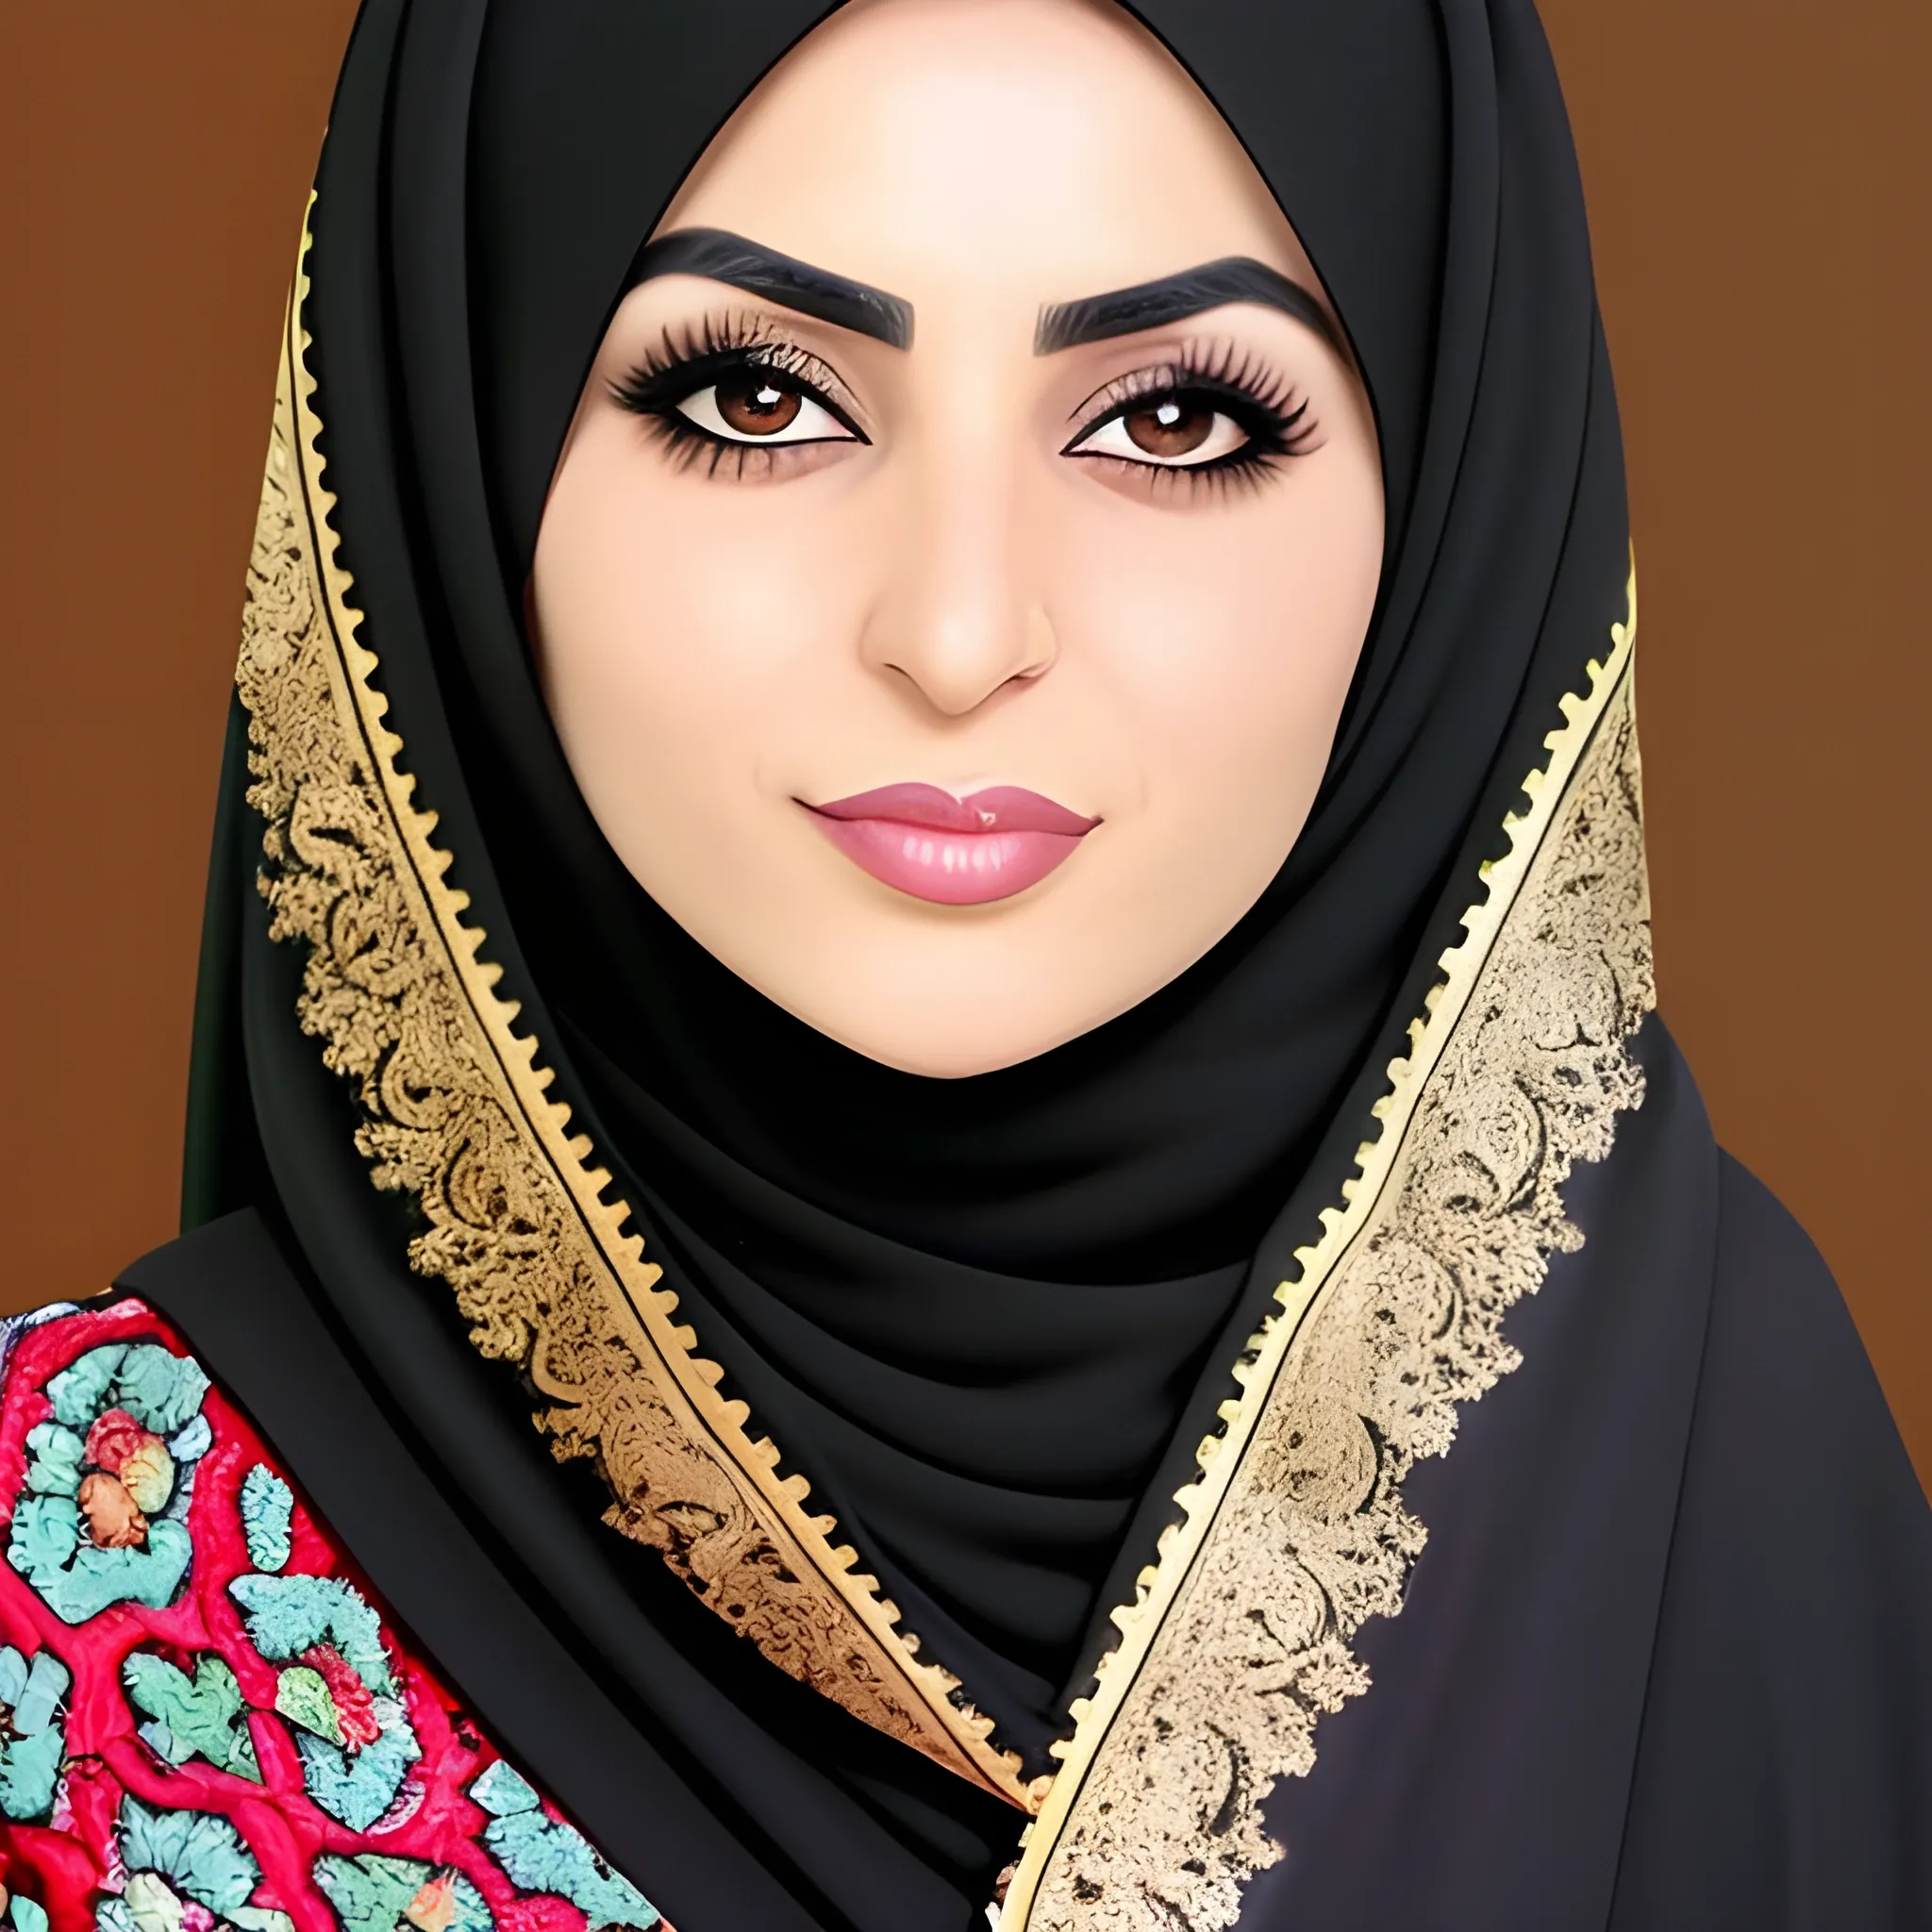 Iranian Woman With A Chador Hijab Arthub Ai